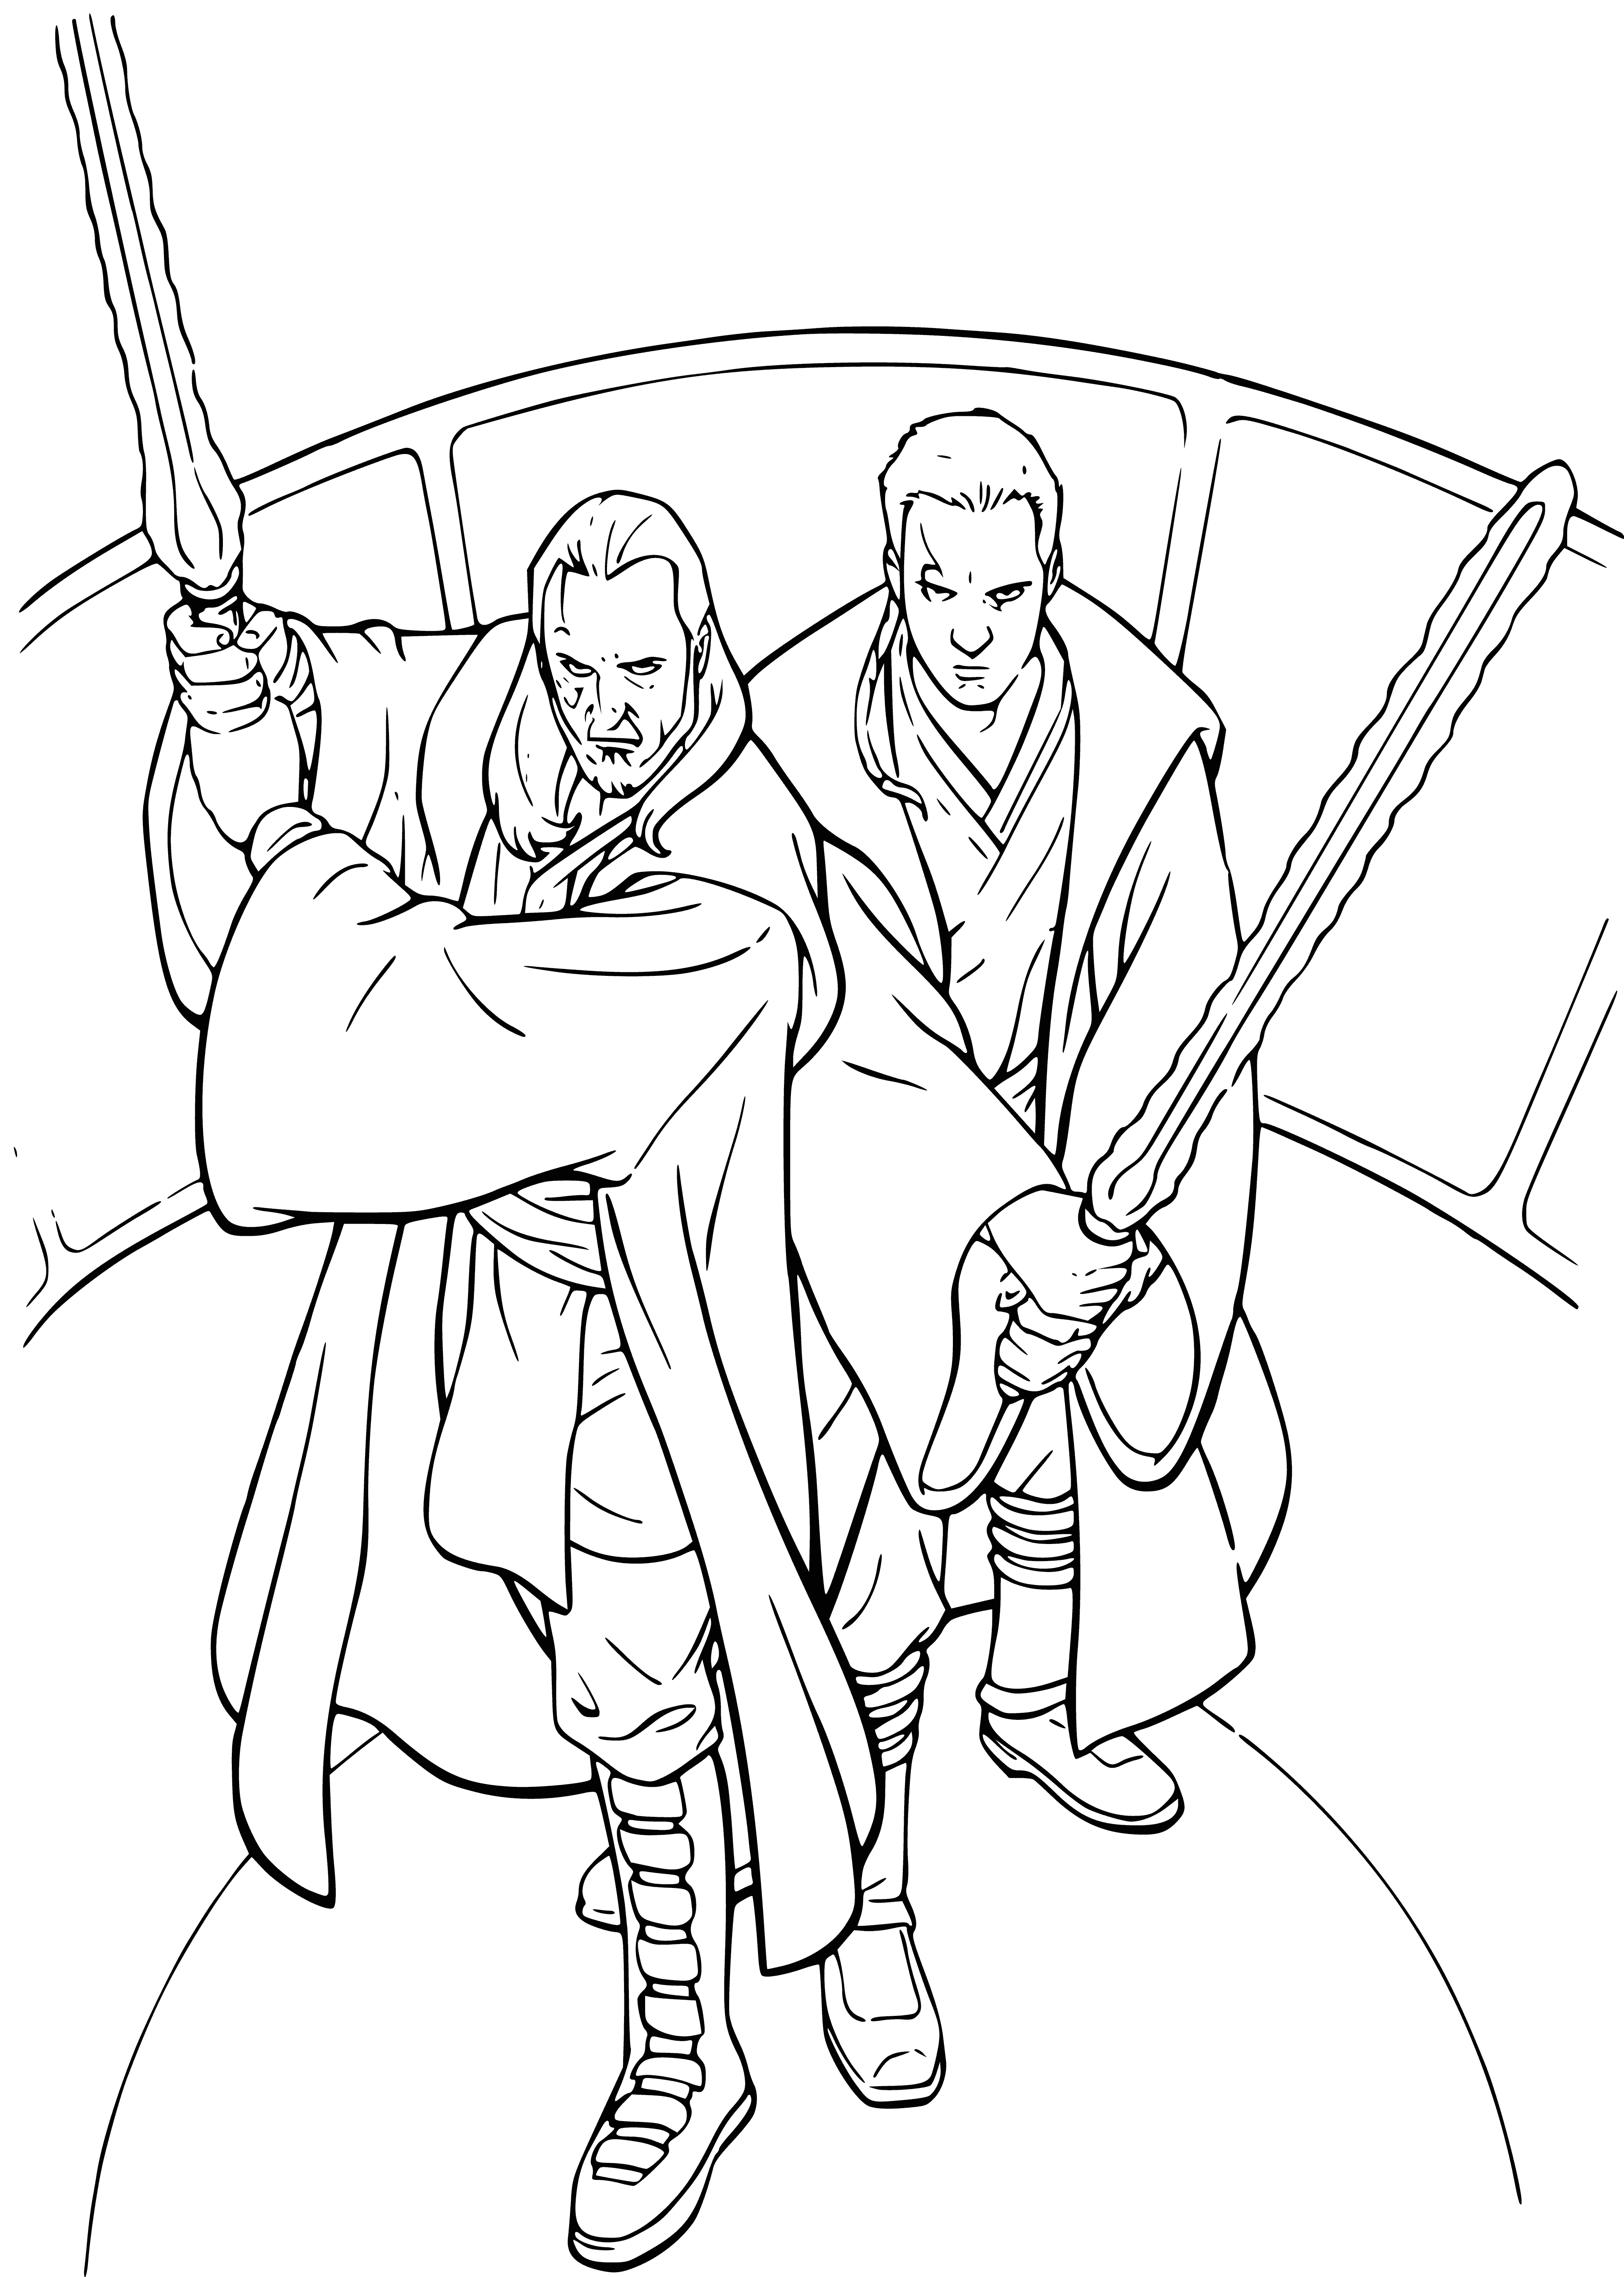 Qui-Gon Jinn and Obi-Wan Kenobi coloring page